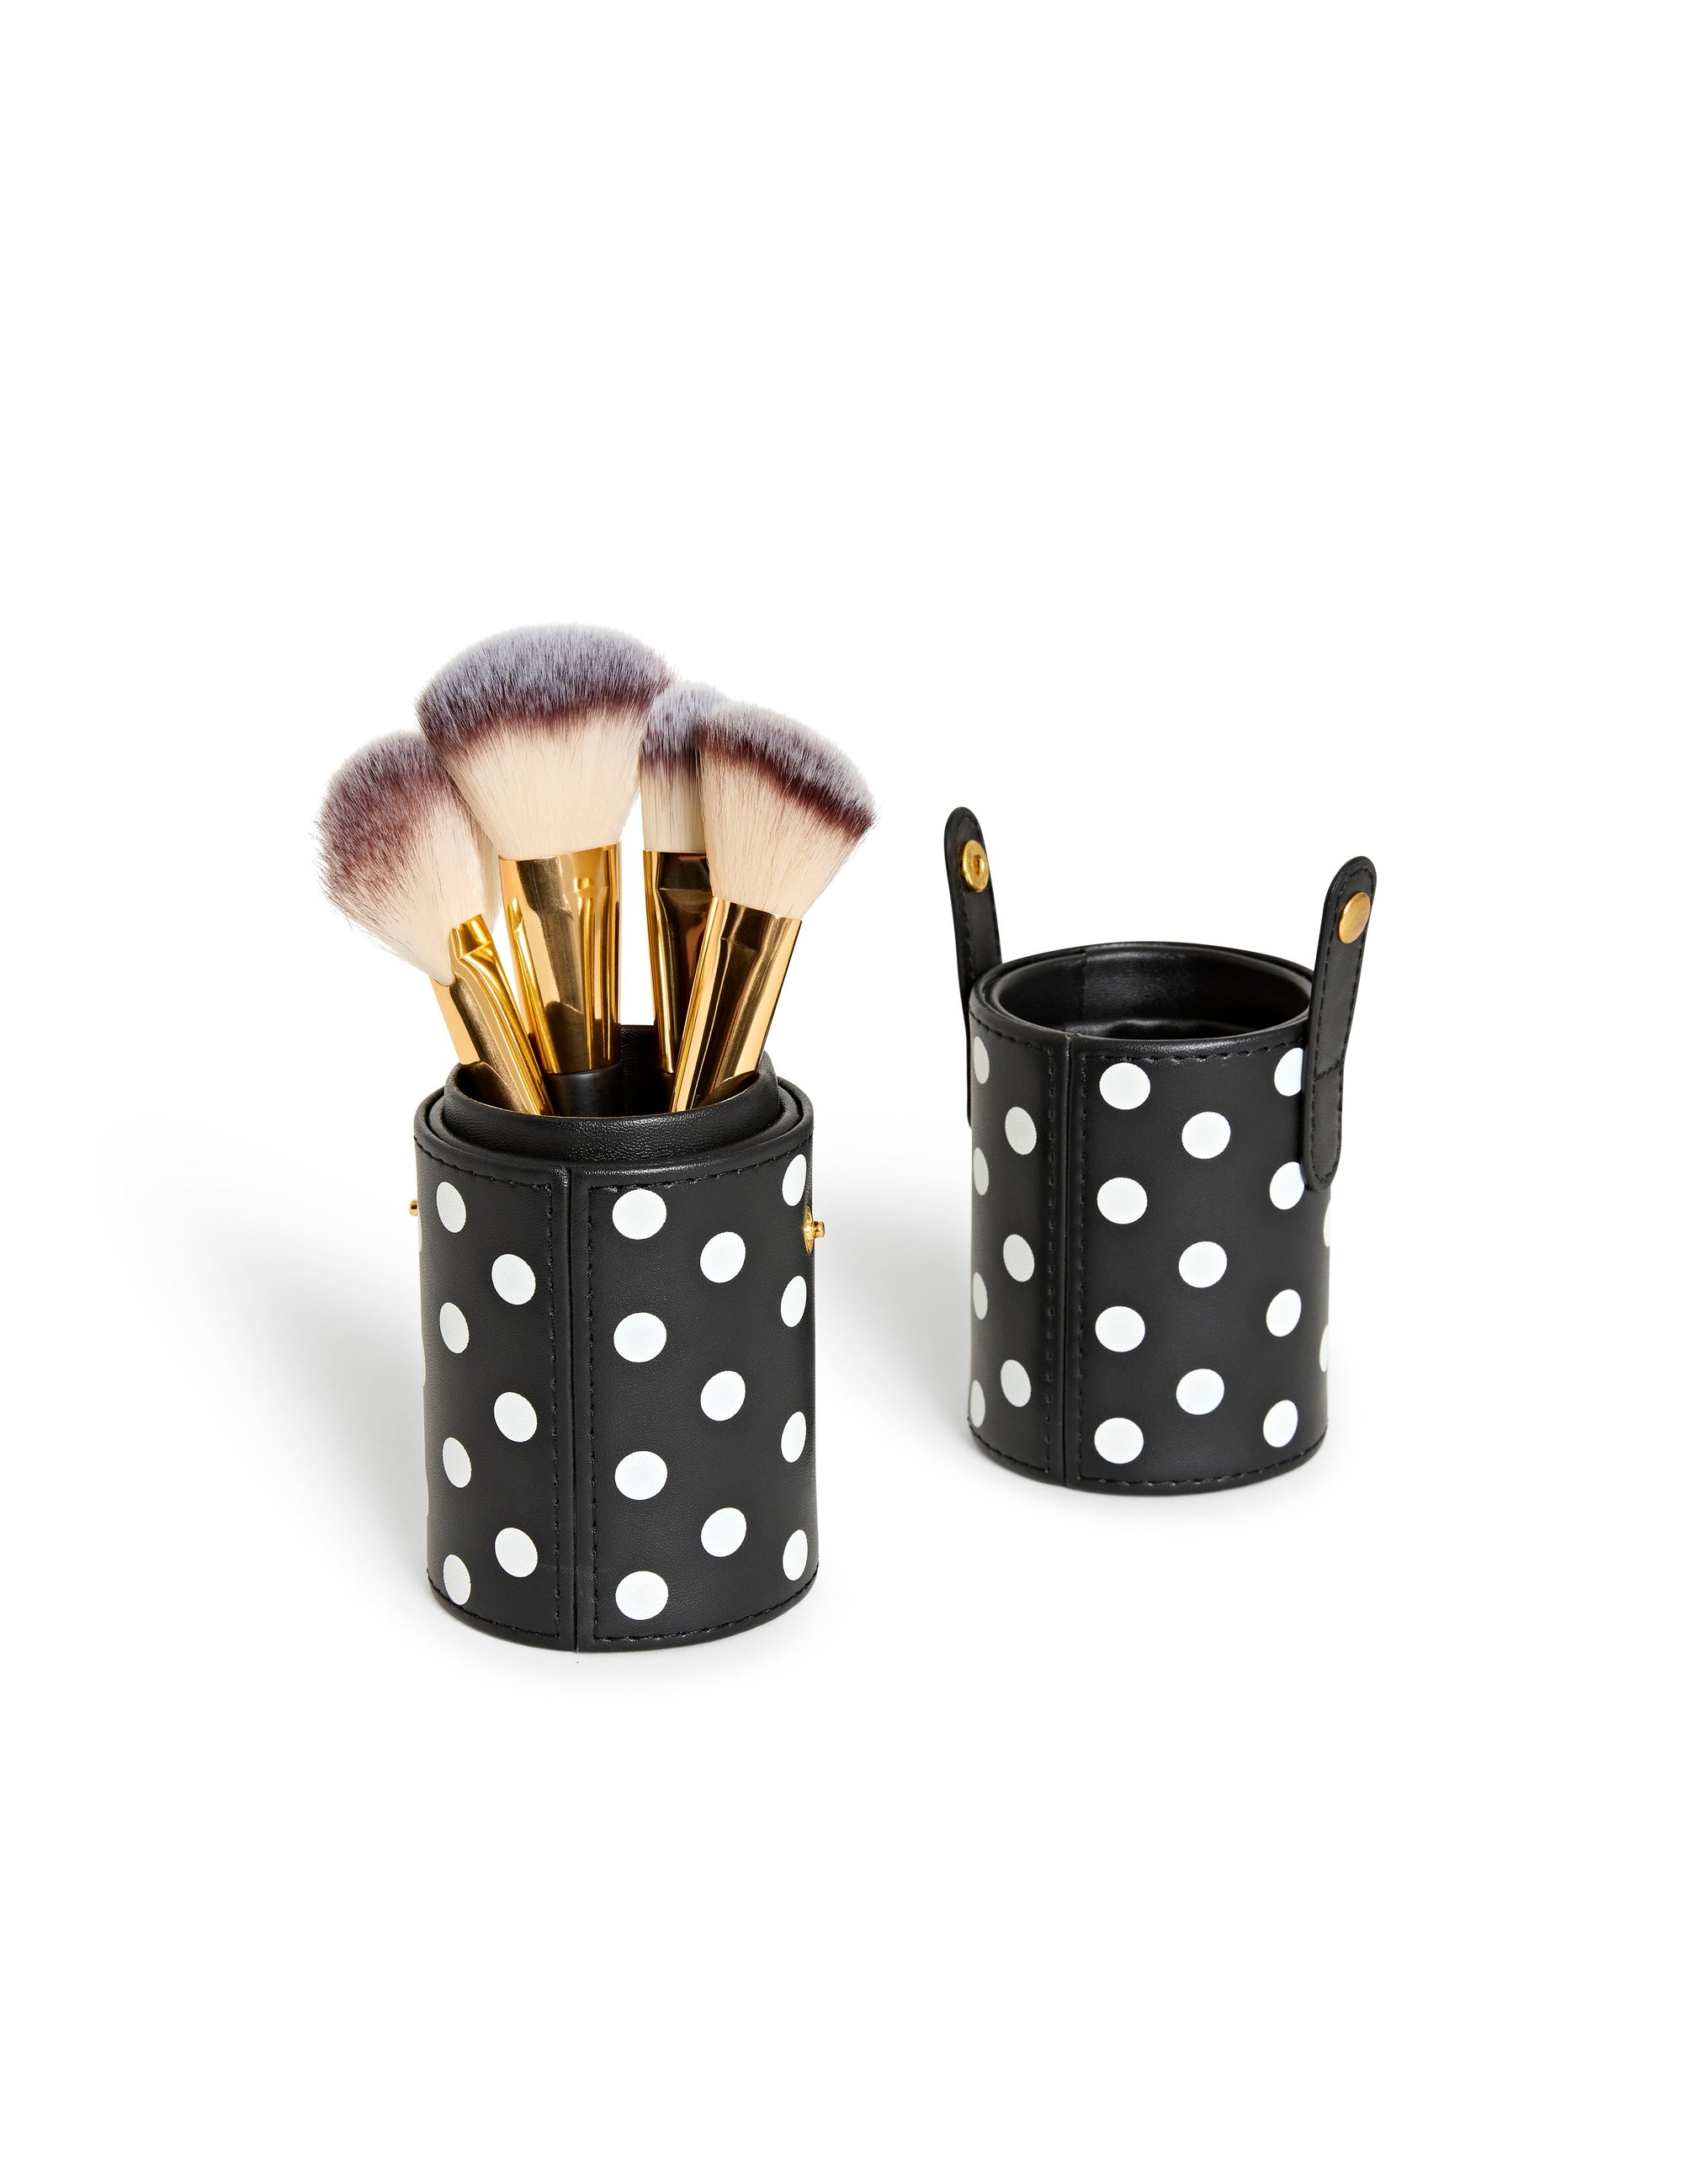 Isaac Mizrahi Polka Dot 4 Piece Brush Set with Case in Black/White